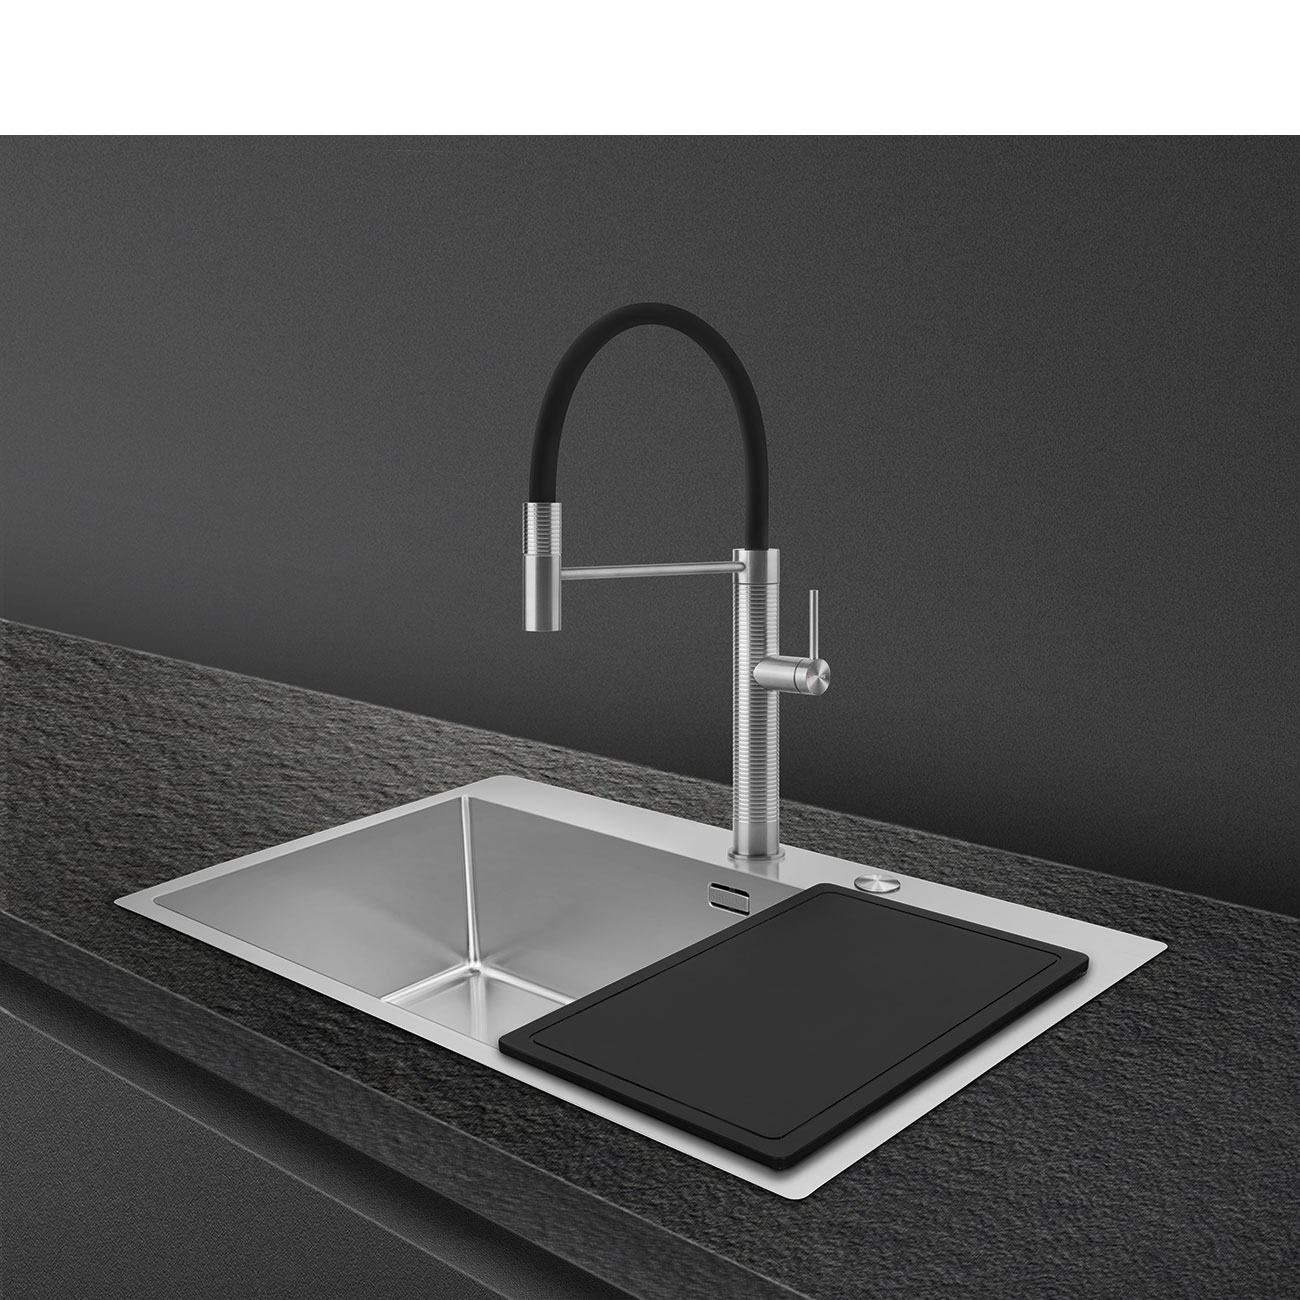 Semi-professional single lever kitchen tap - Smeg_3